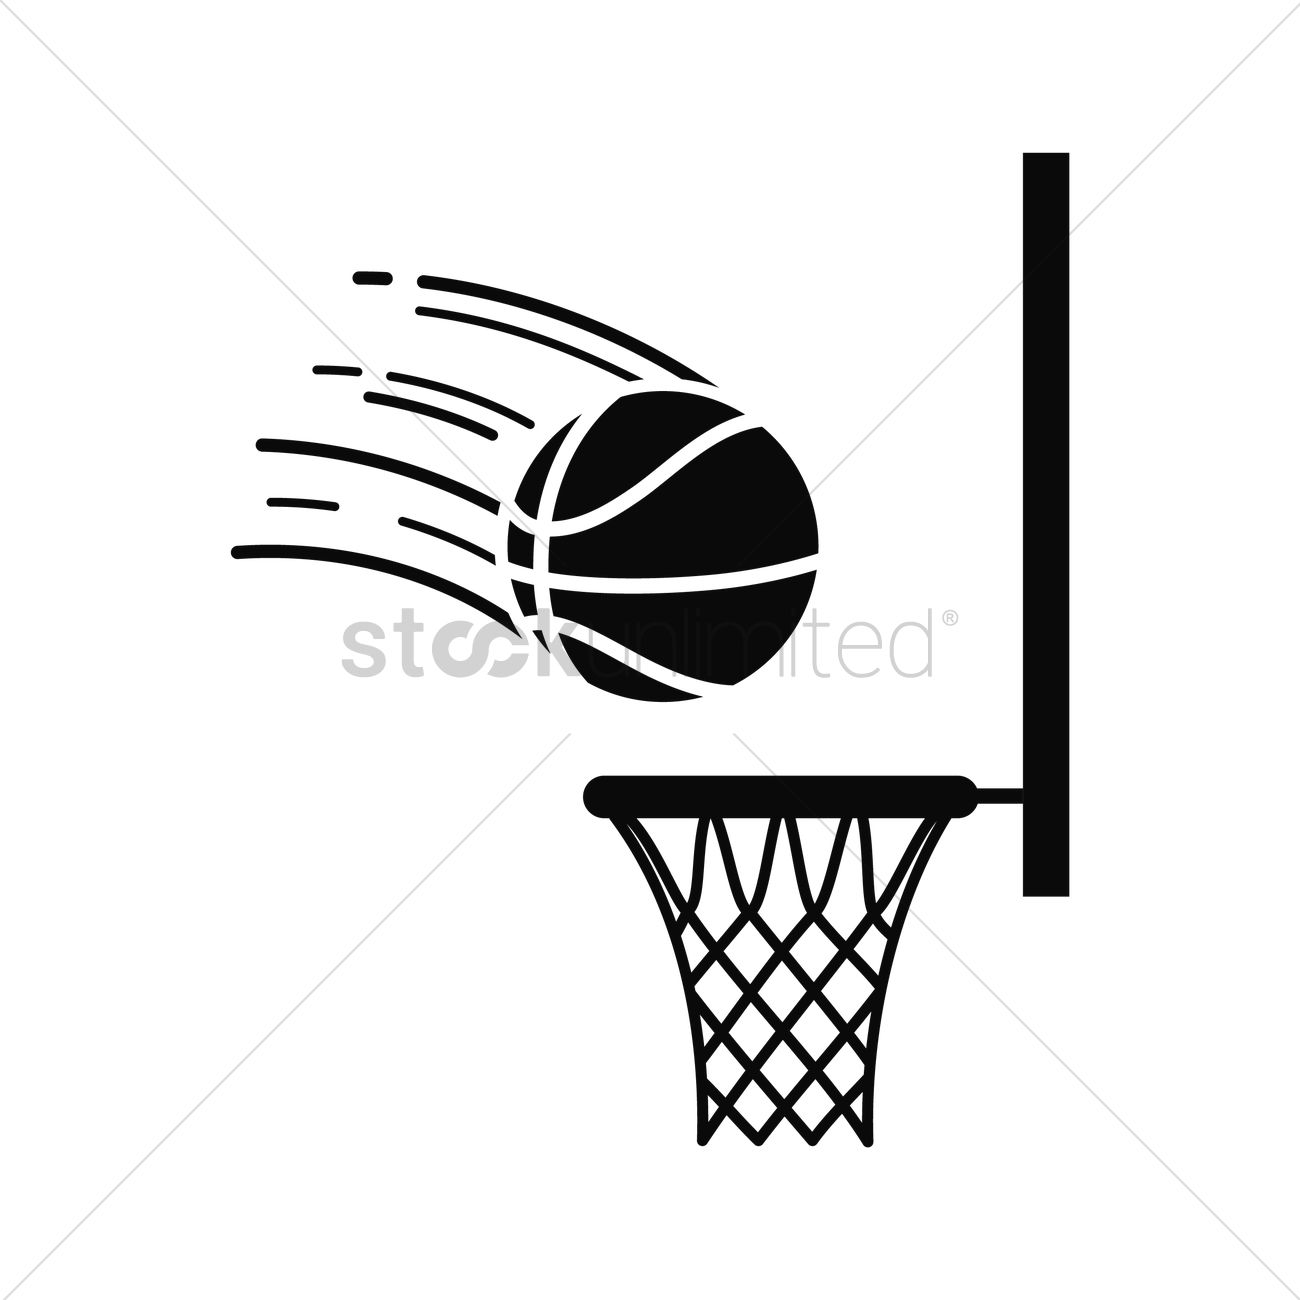 Баскетбольное кольцо контур